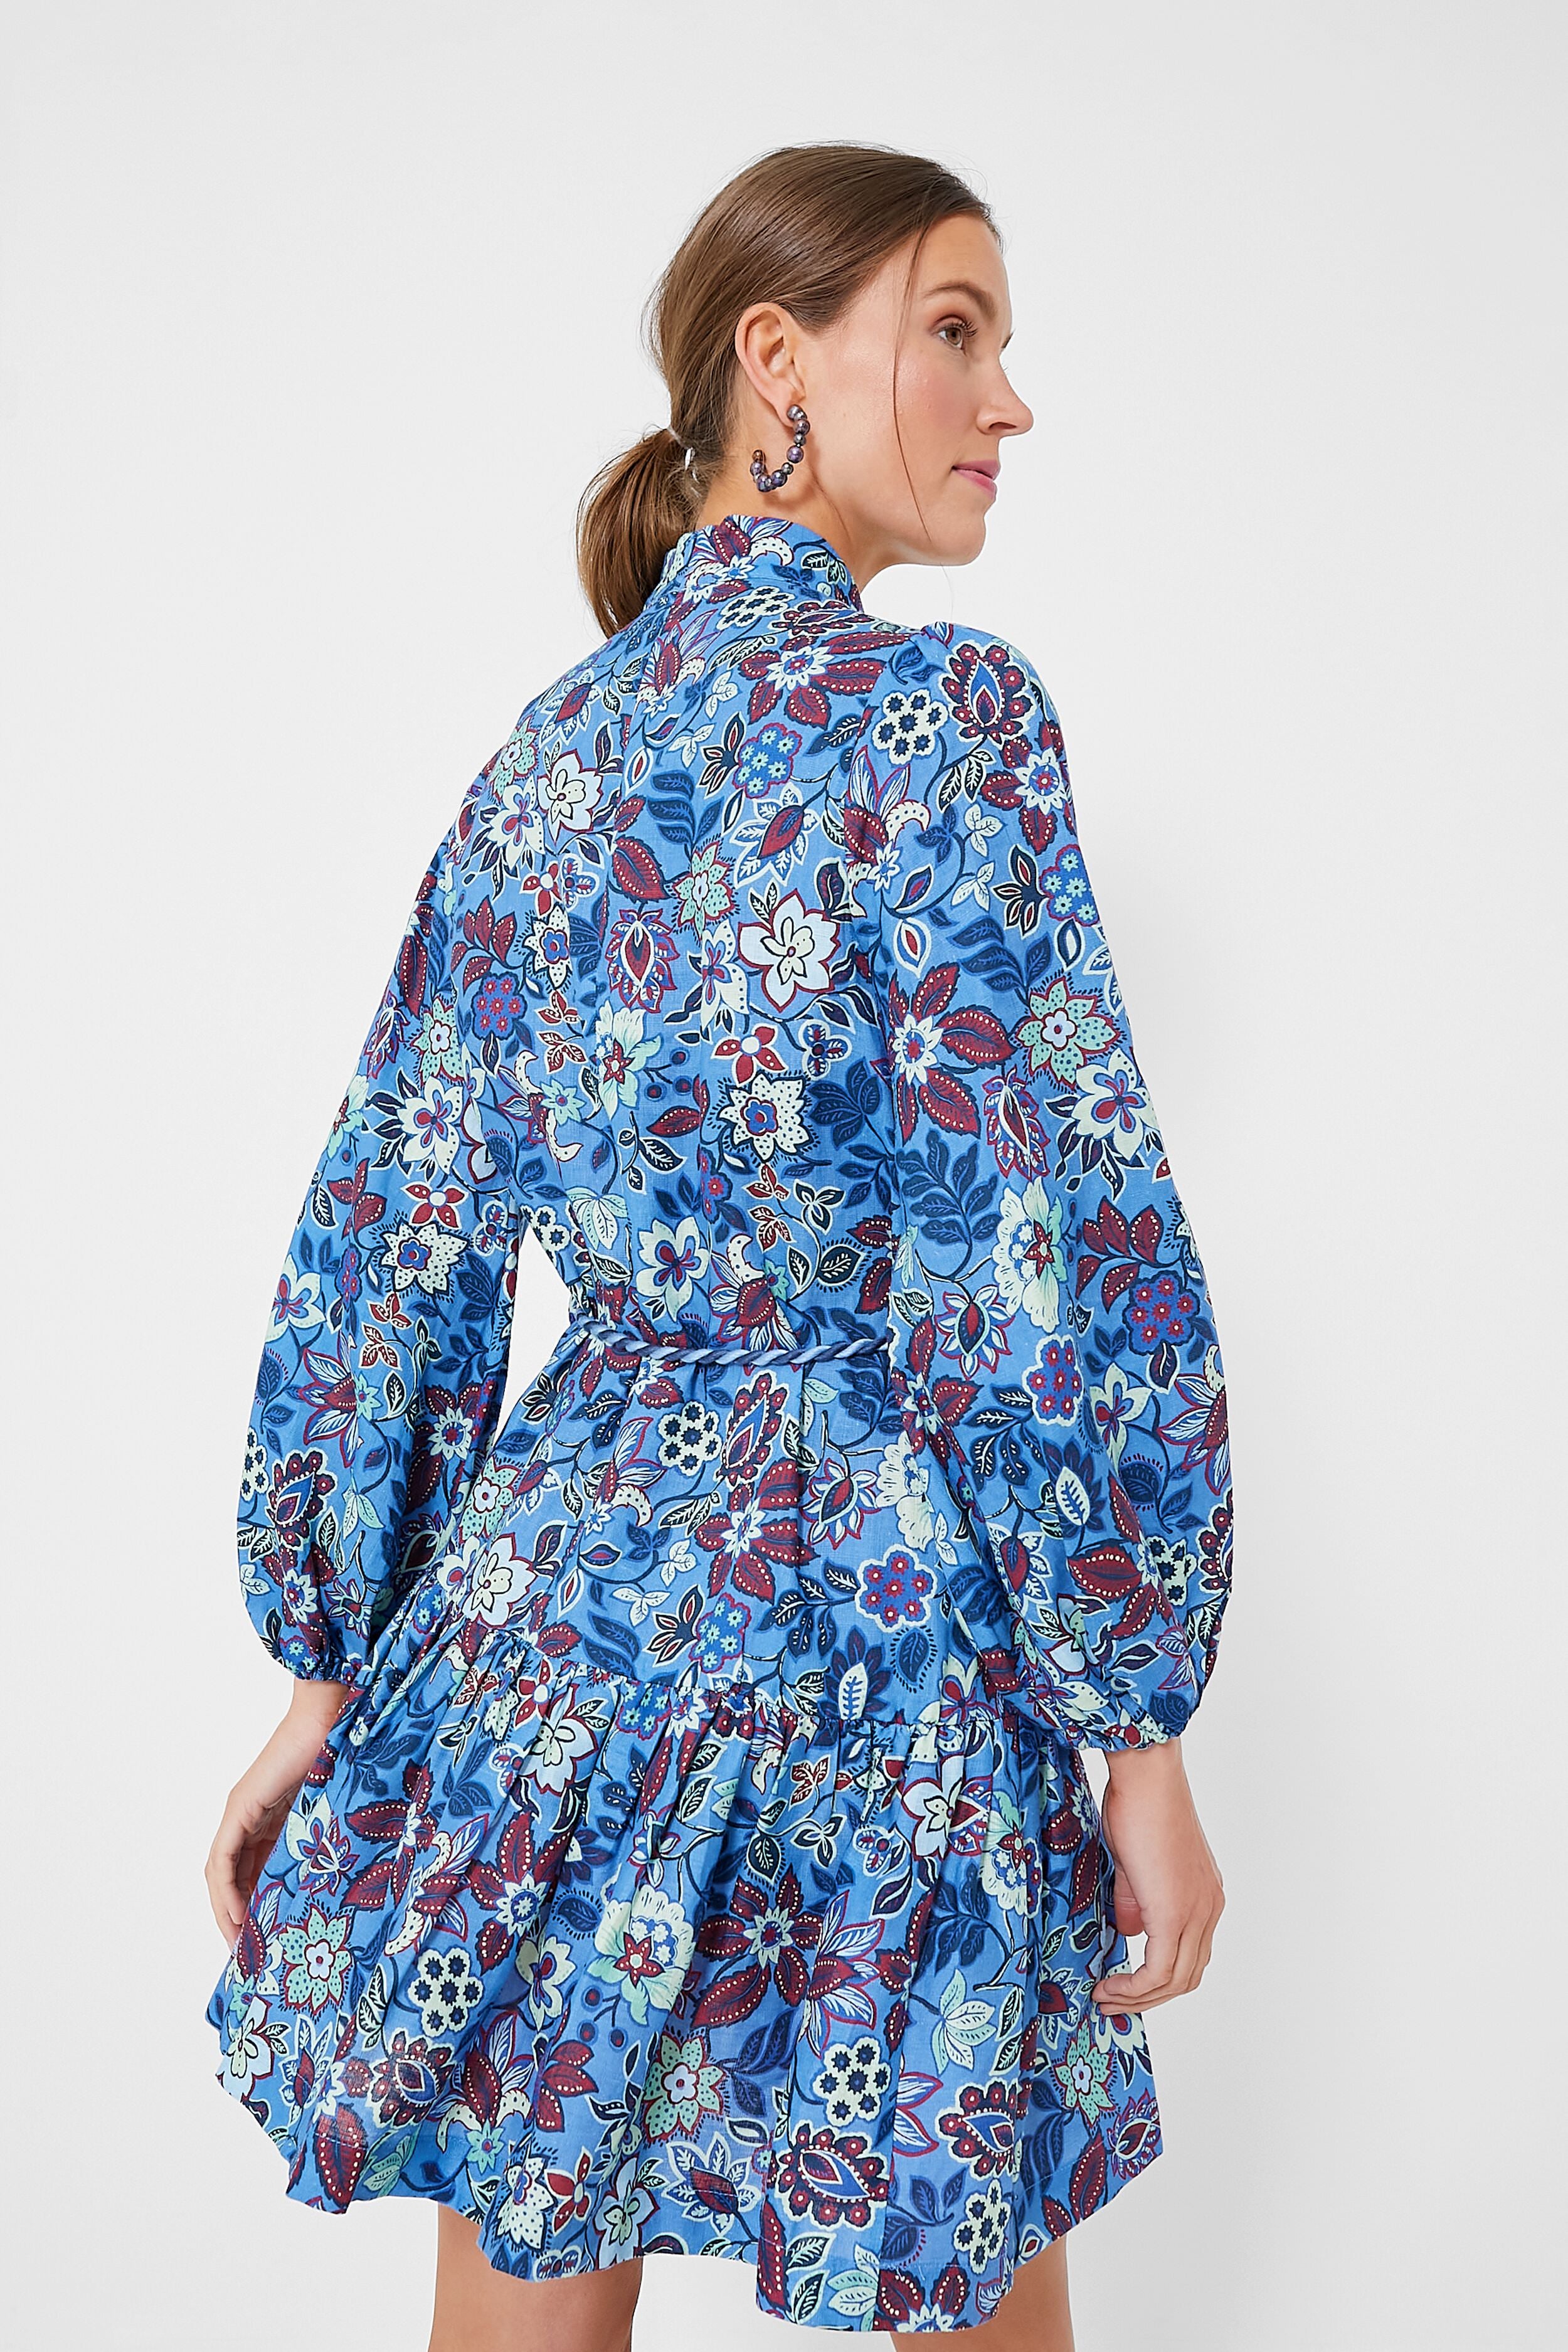 Isabela Dress by Ulla Johnson for $134